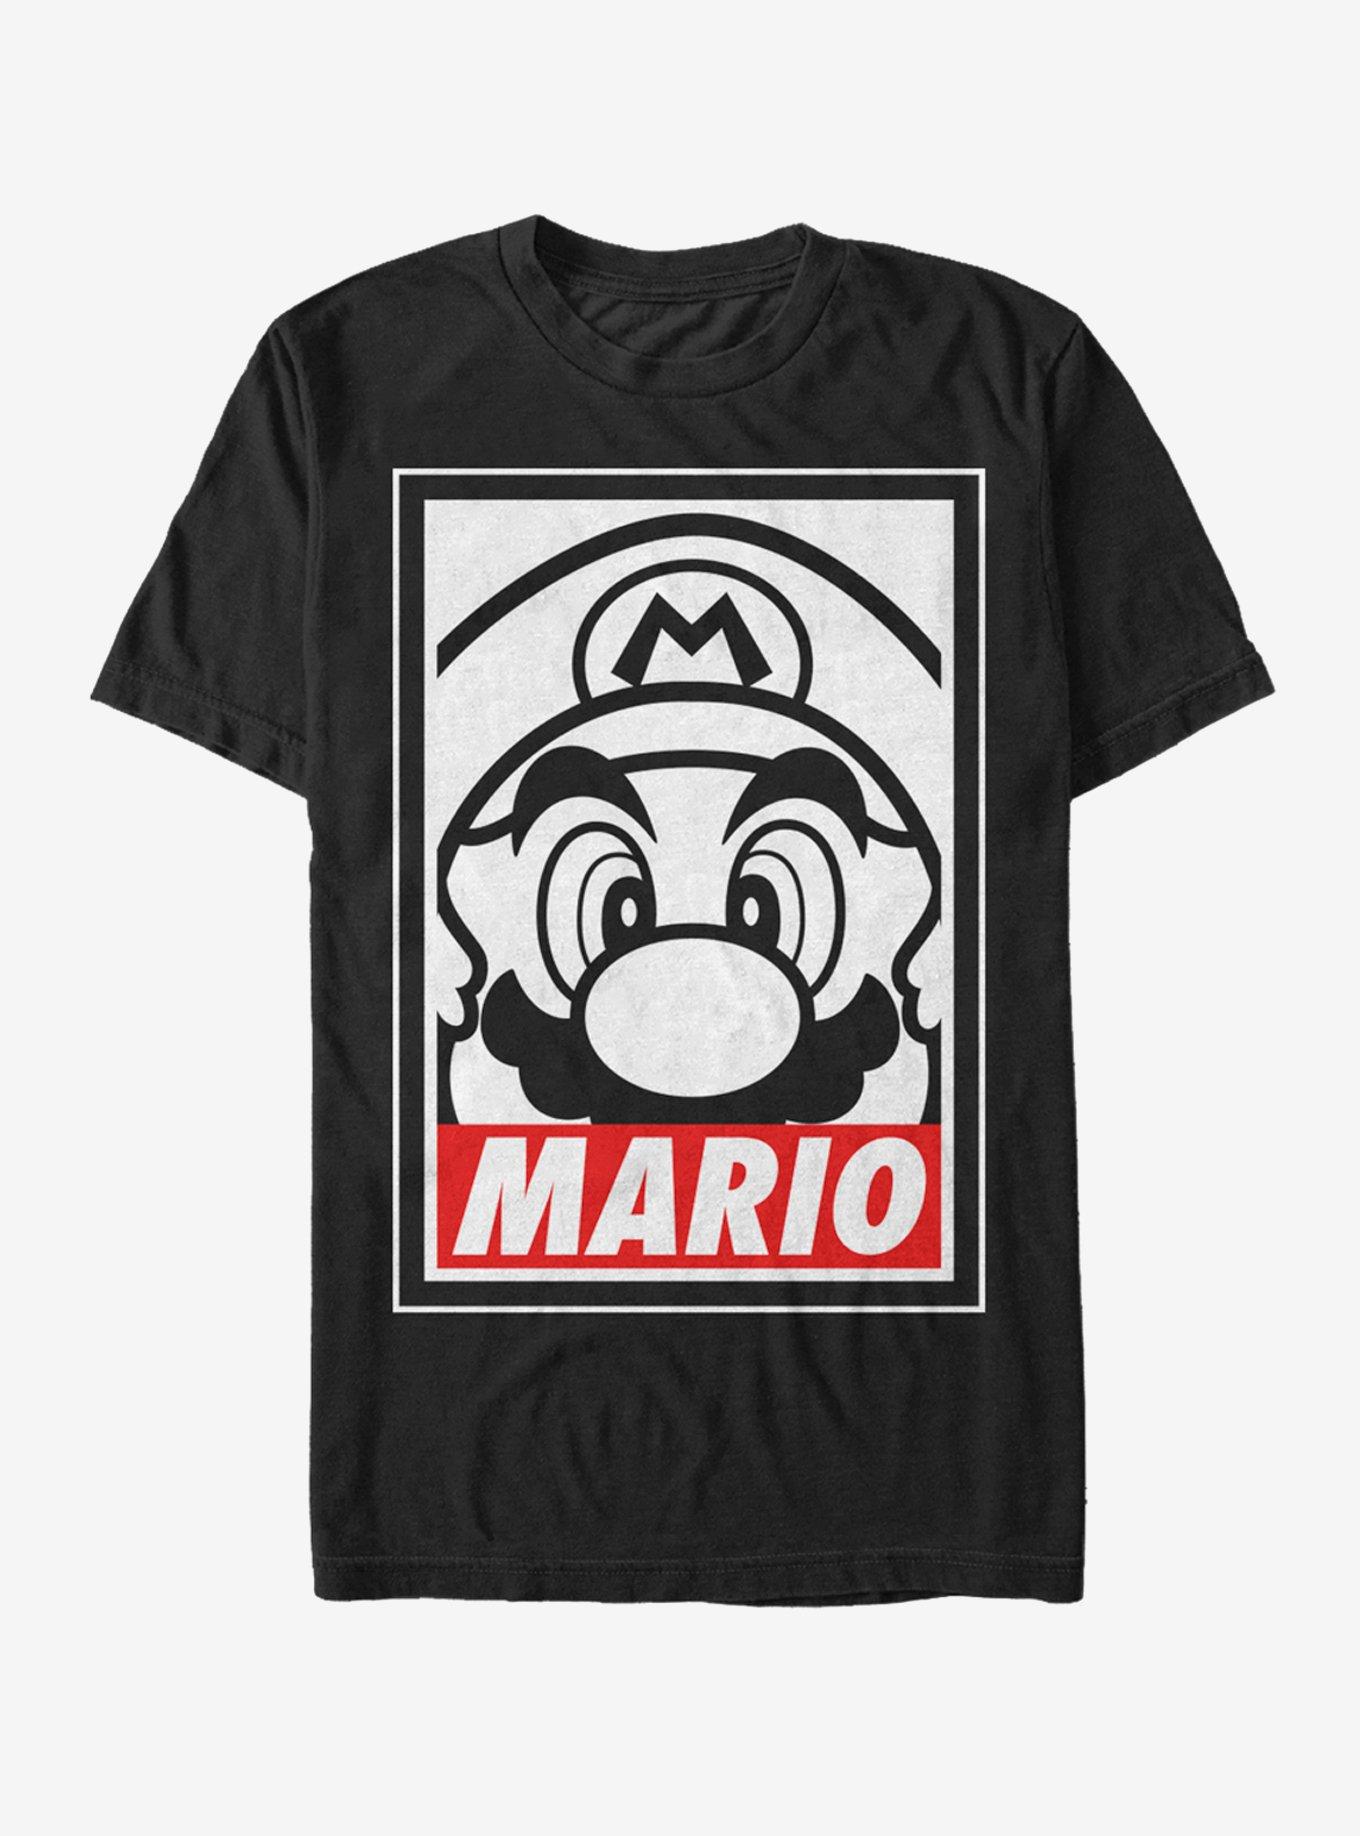 Nintendo Mario Close Up T-Shirt